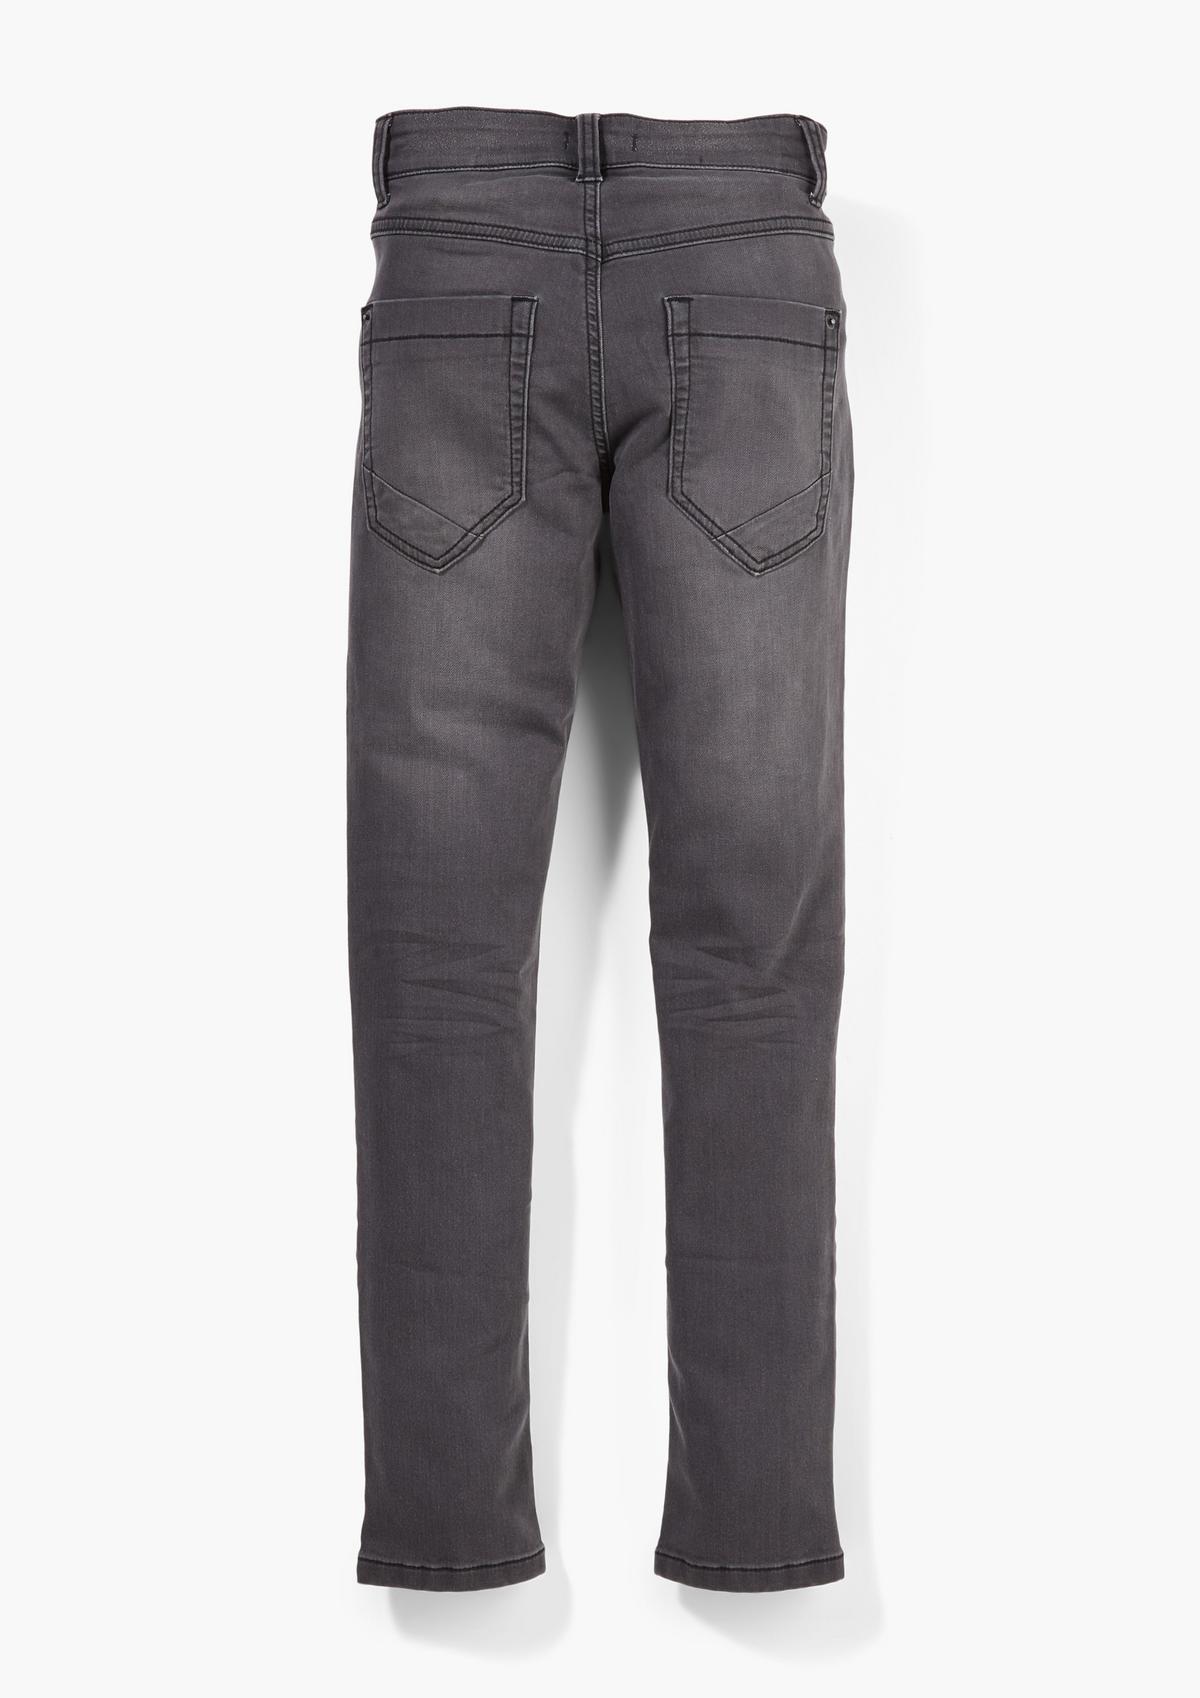 s.Oliver Skinny: super skinny leg jeans